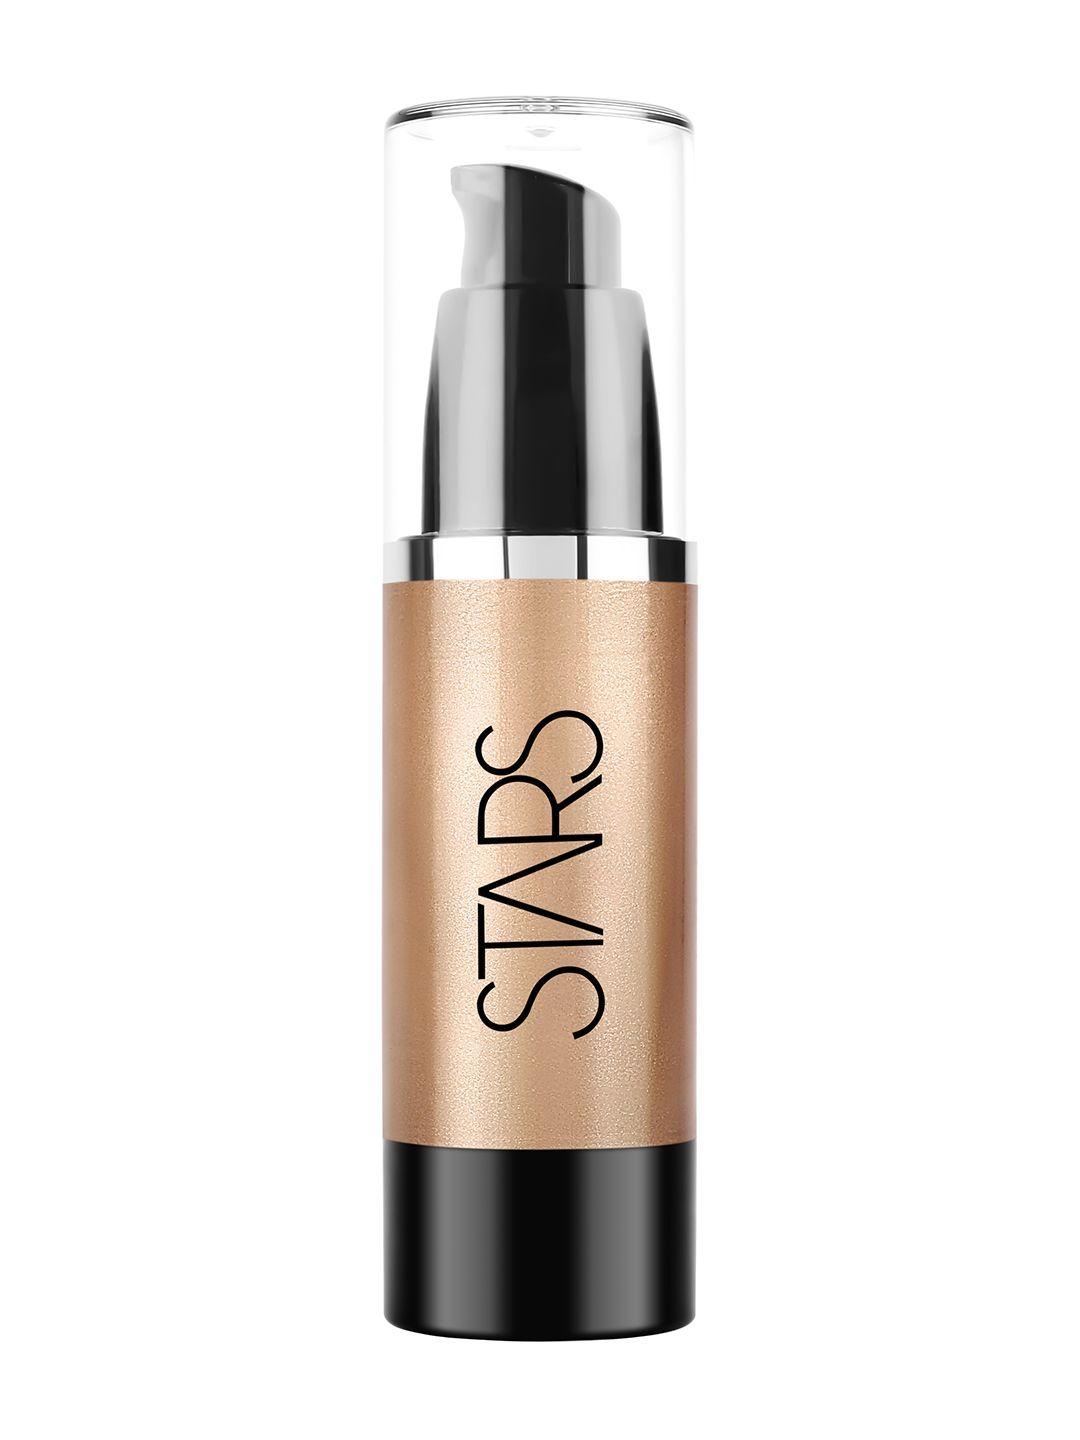 stars-cosmetics-reflect-illuminator-liquid-highlighter-40-ml---soft-bronze